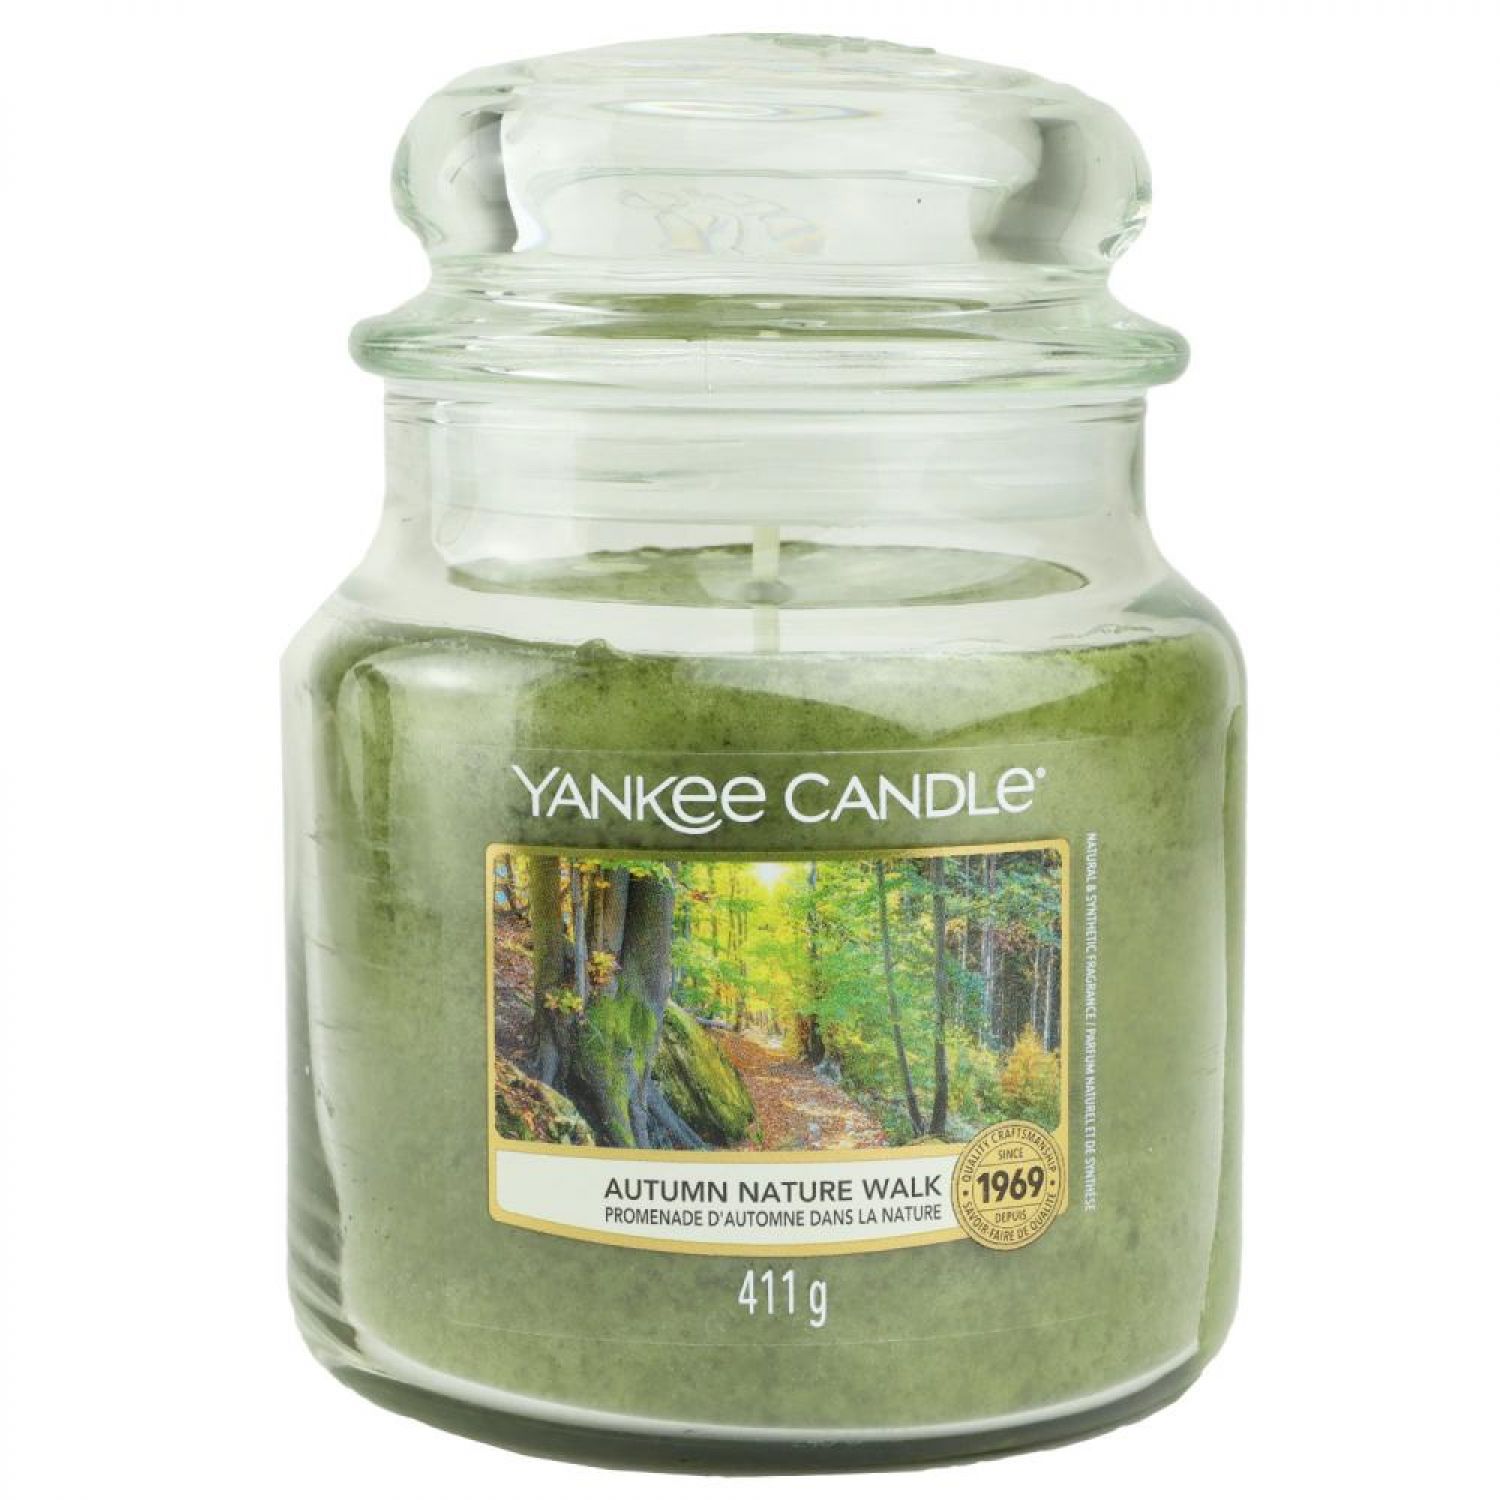 Yankee Candle Duftkerze Autumn Nature Walk im Glas Jar